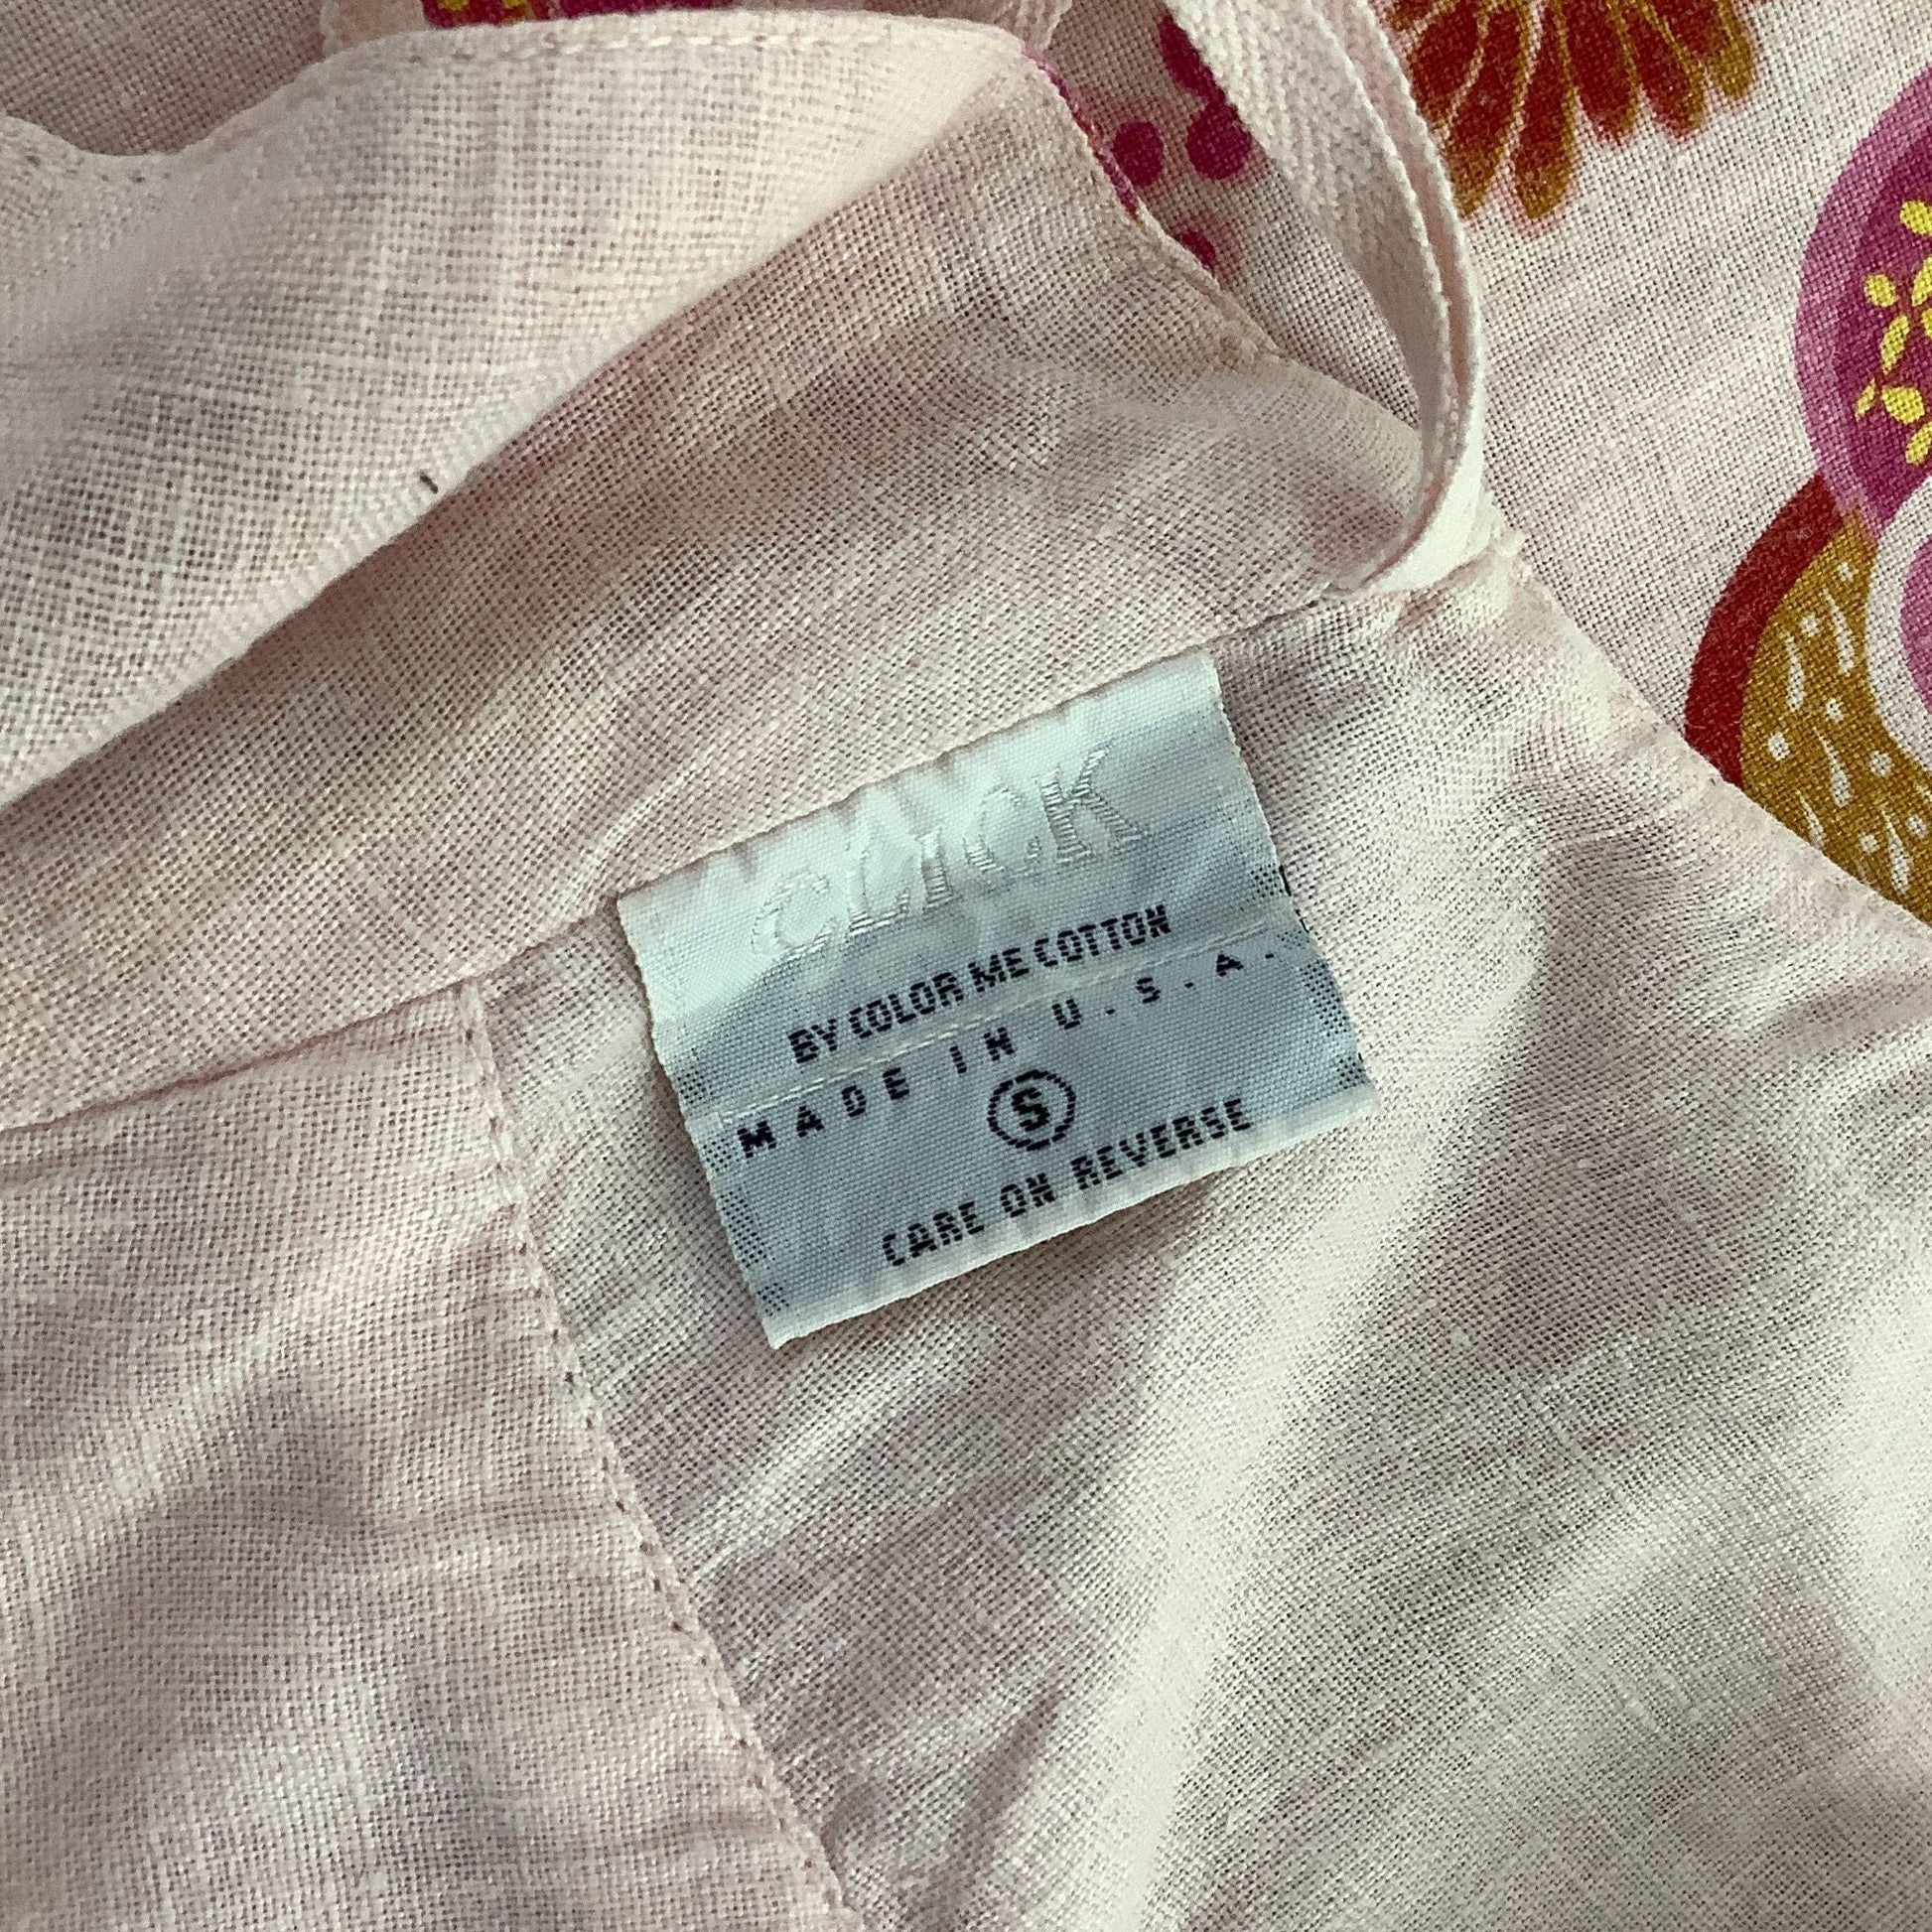 Linen Halter Dress Small / Pink / Vintage 1980s